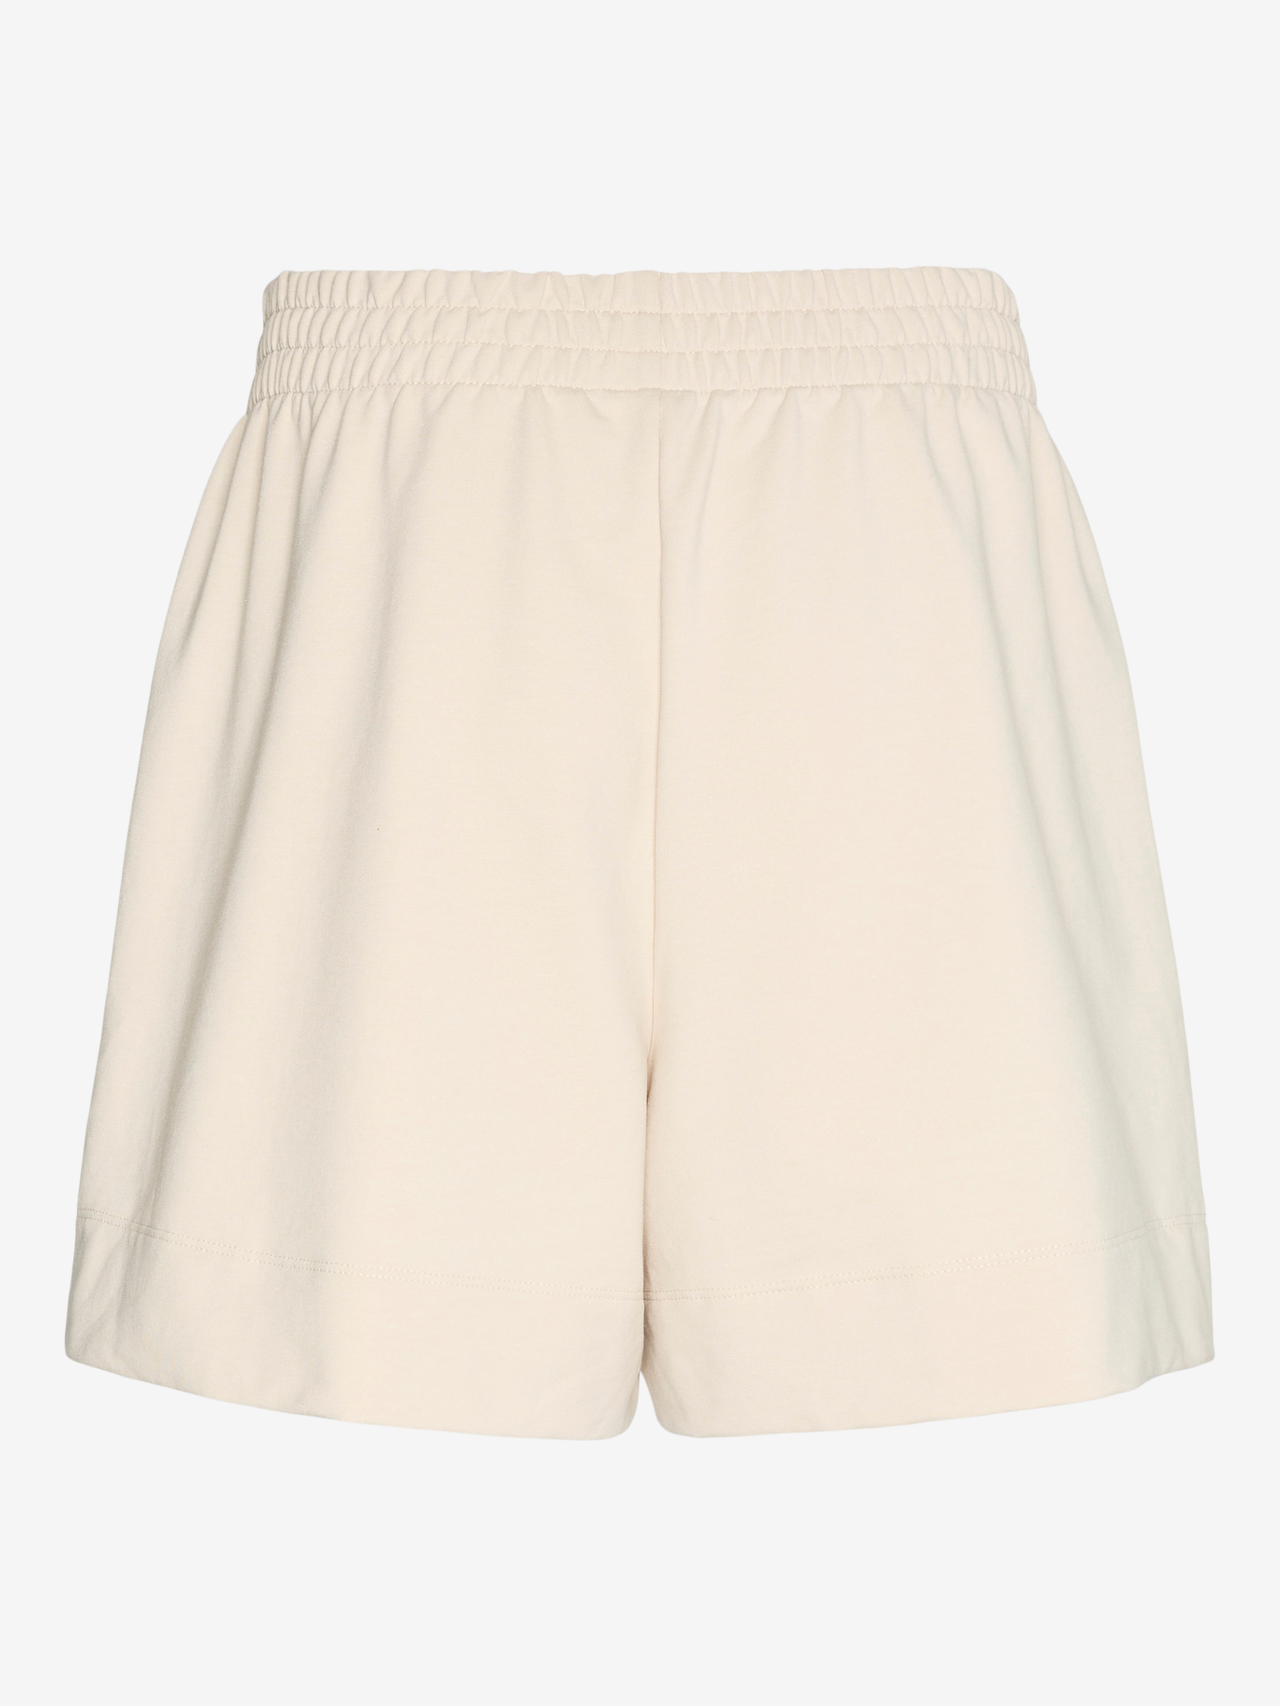 Vero Moda OL Shorts -Oatmeal - 10305298